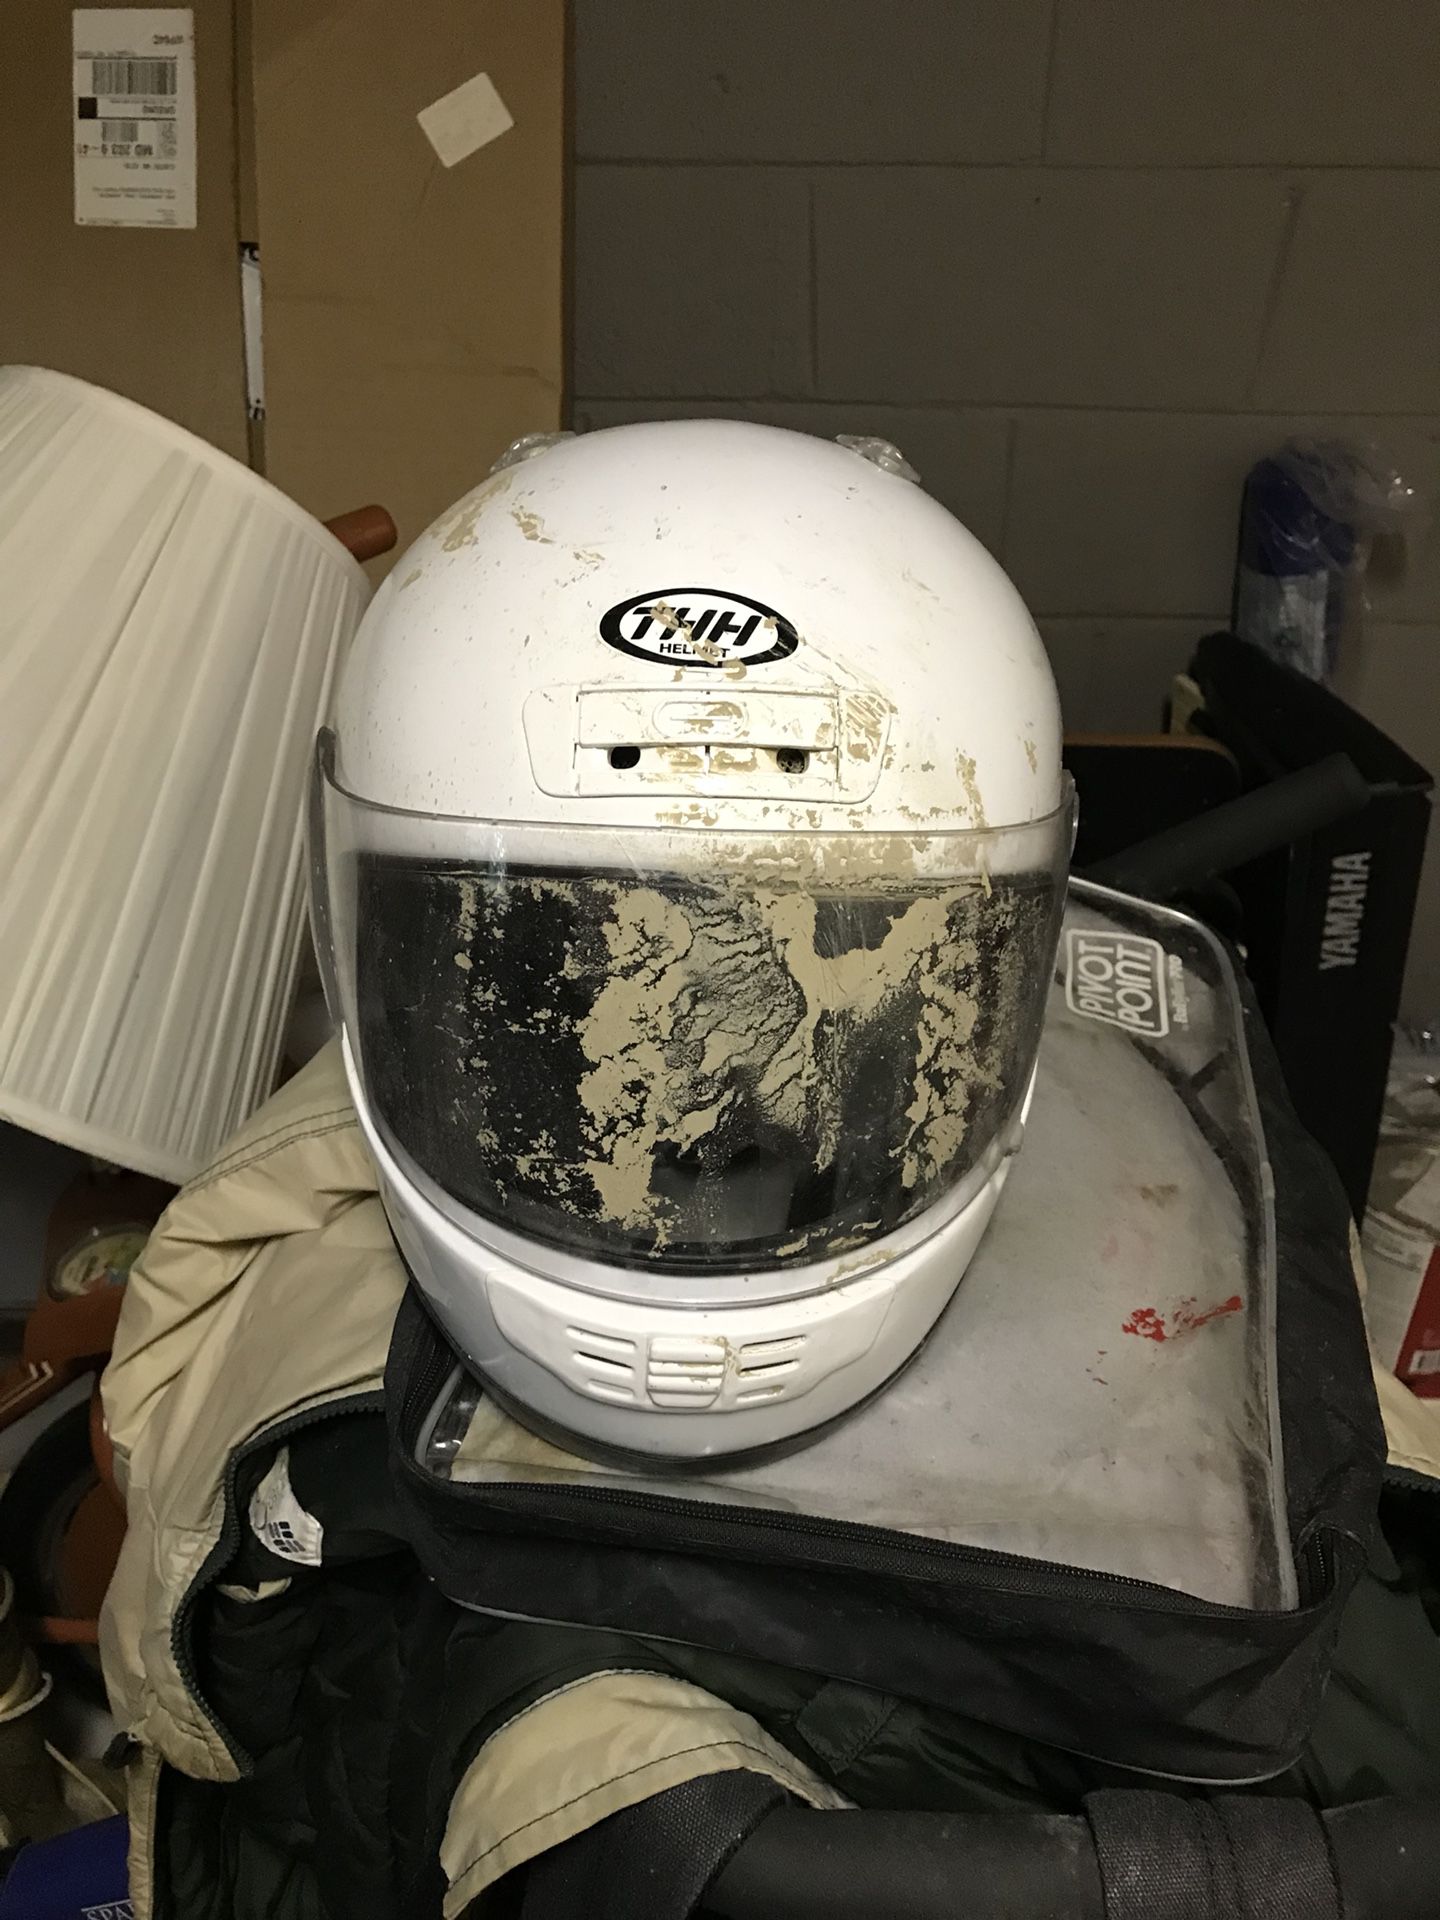 THH Dirt bike helmet